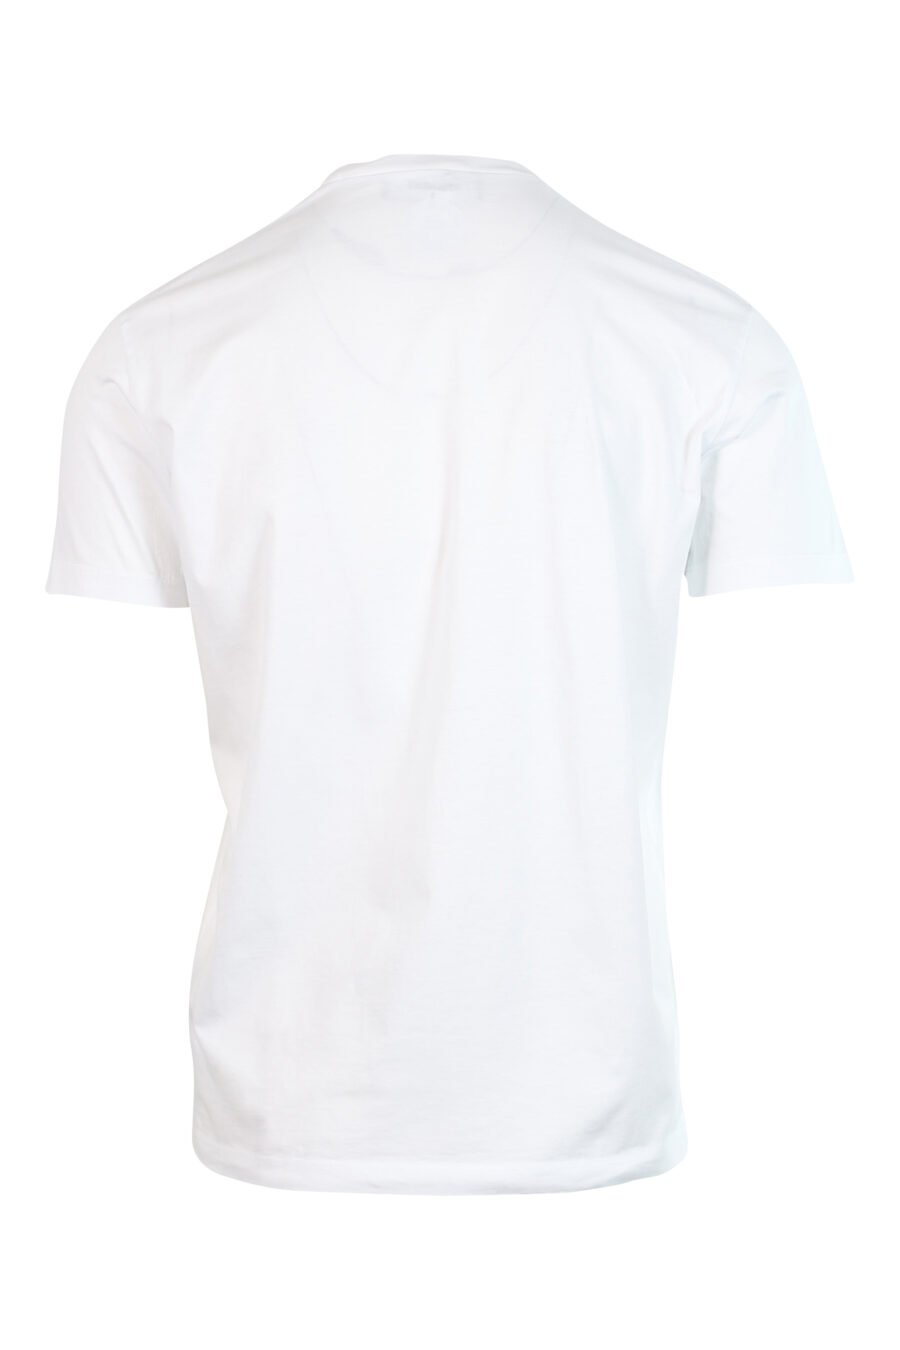 T-shirt blanc avec maxilogo "icône cœur pixel" - 8052134980842 2